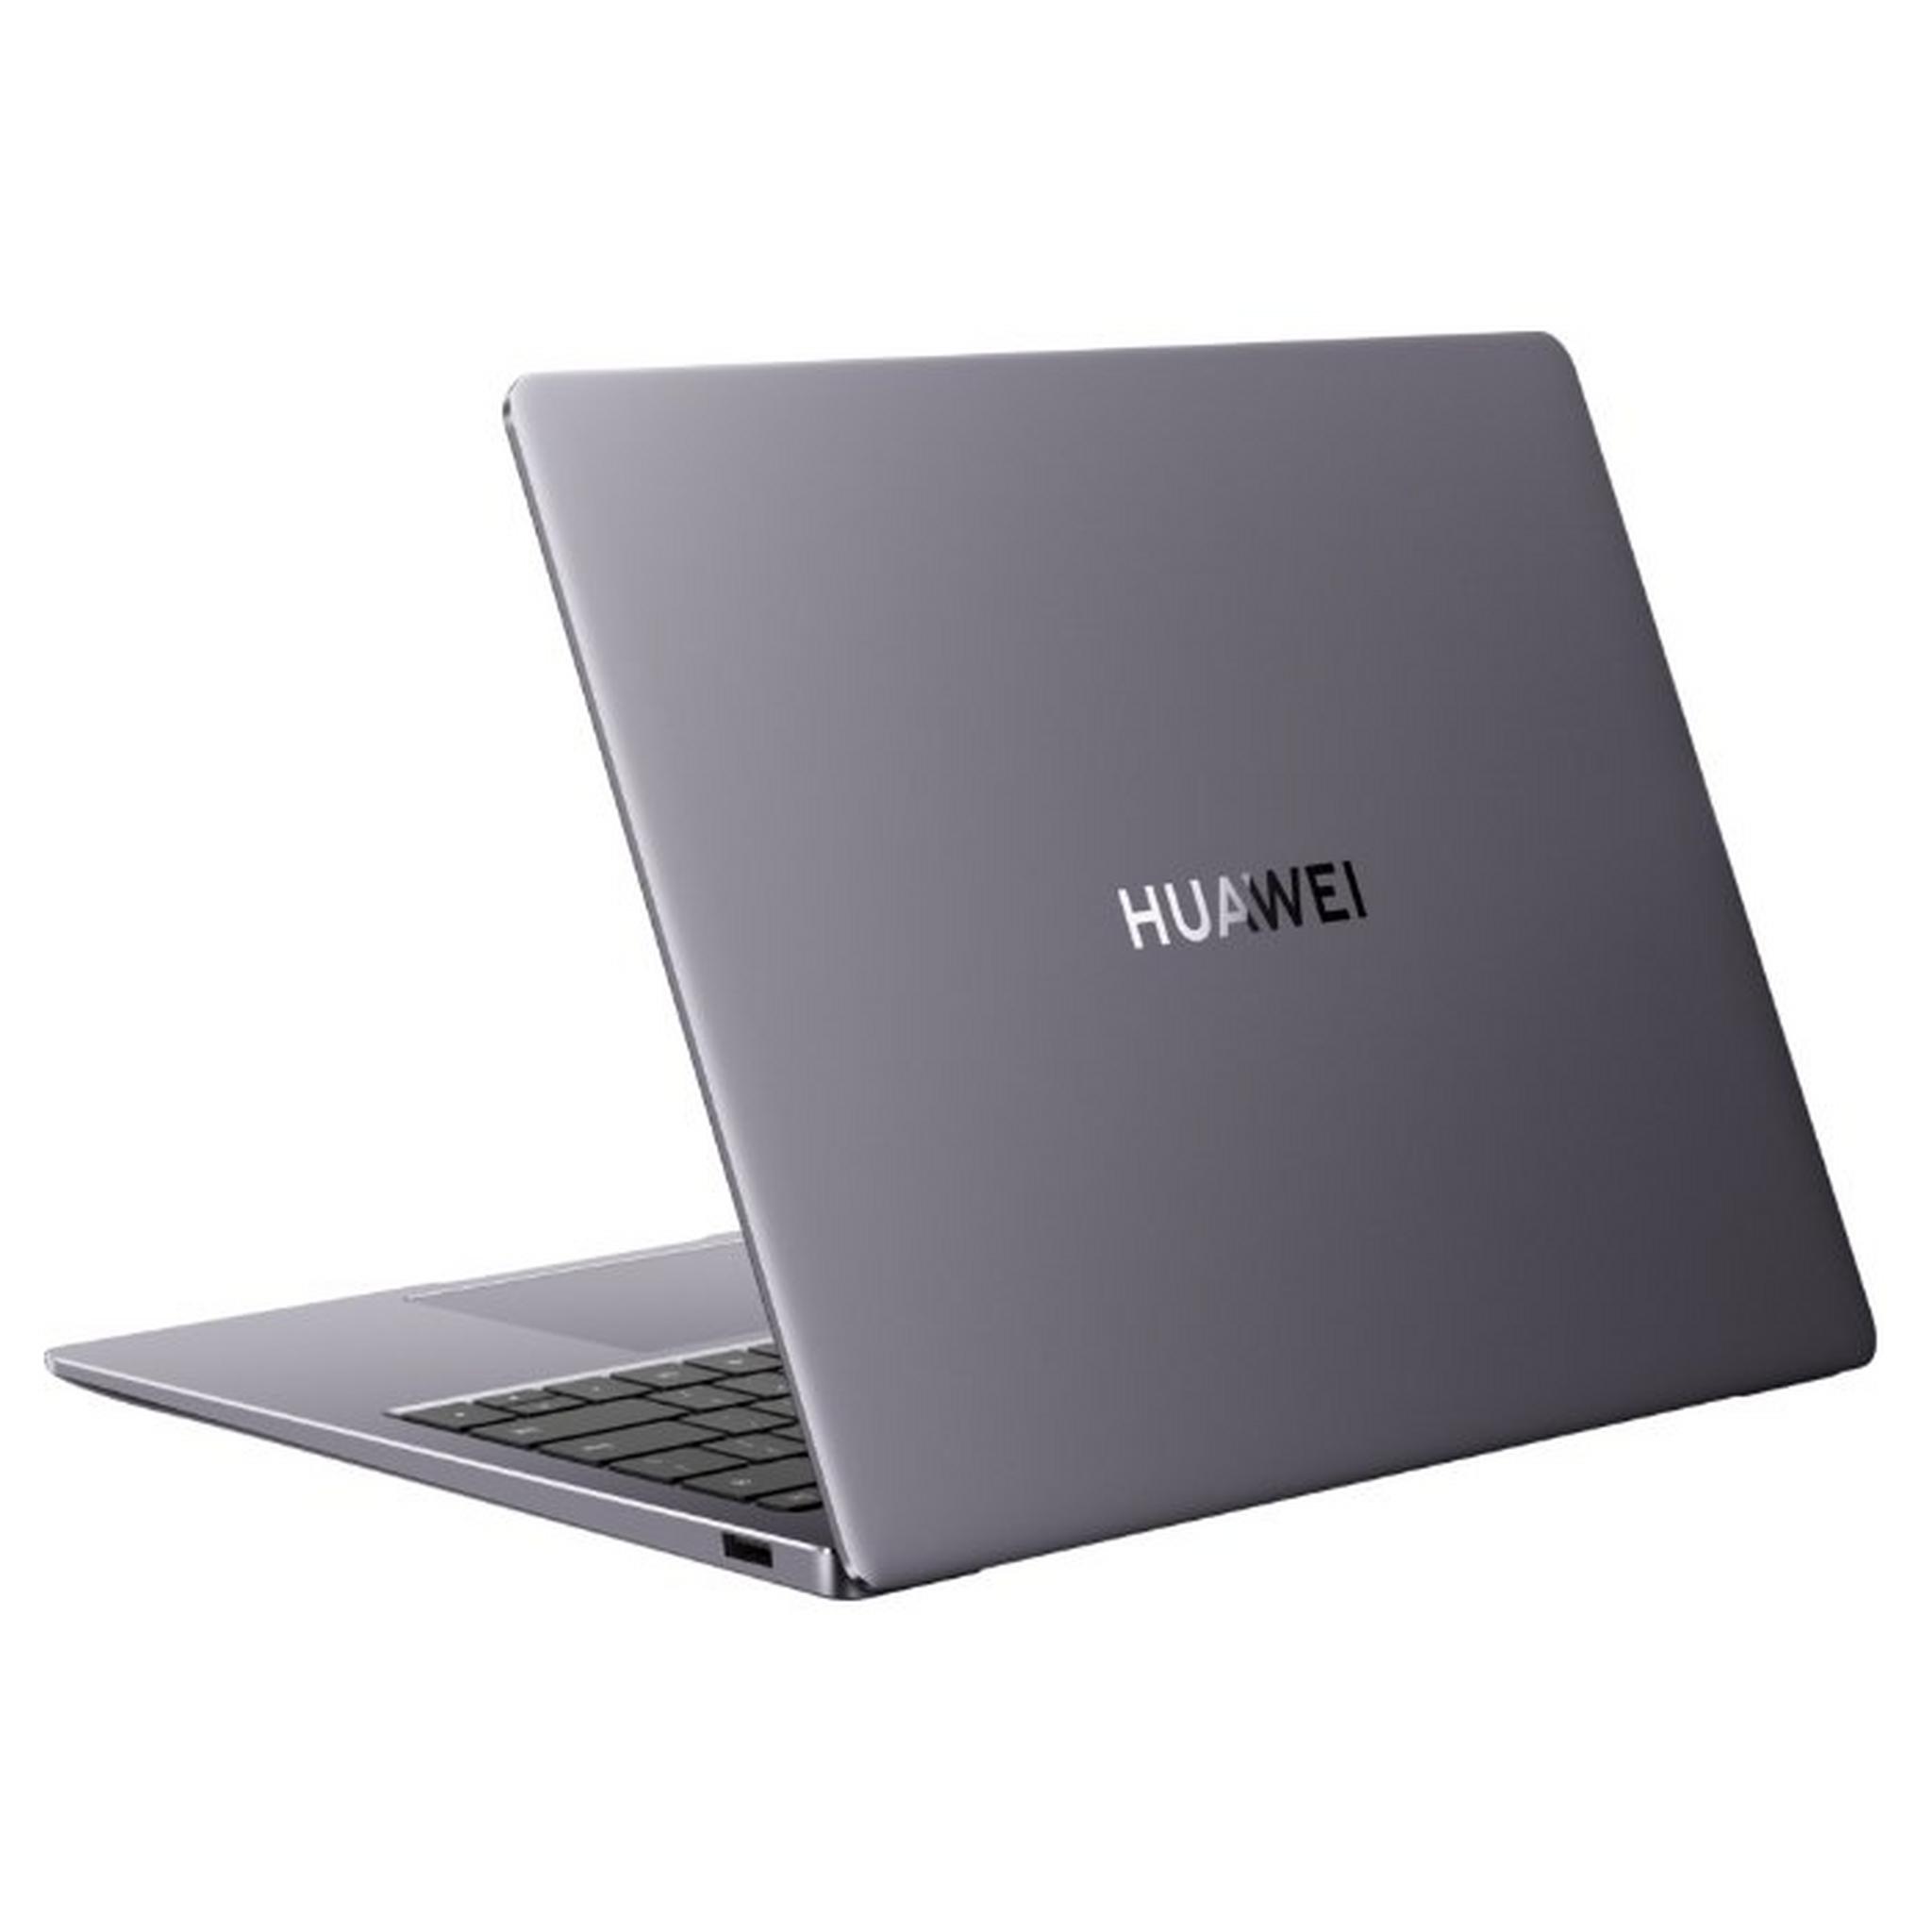 Huawei Matebook 14s Intel Core i7 11th Gen, 16GB RAM, 512GB SSD, 14.2-inch Laptop - Grey